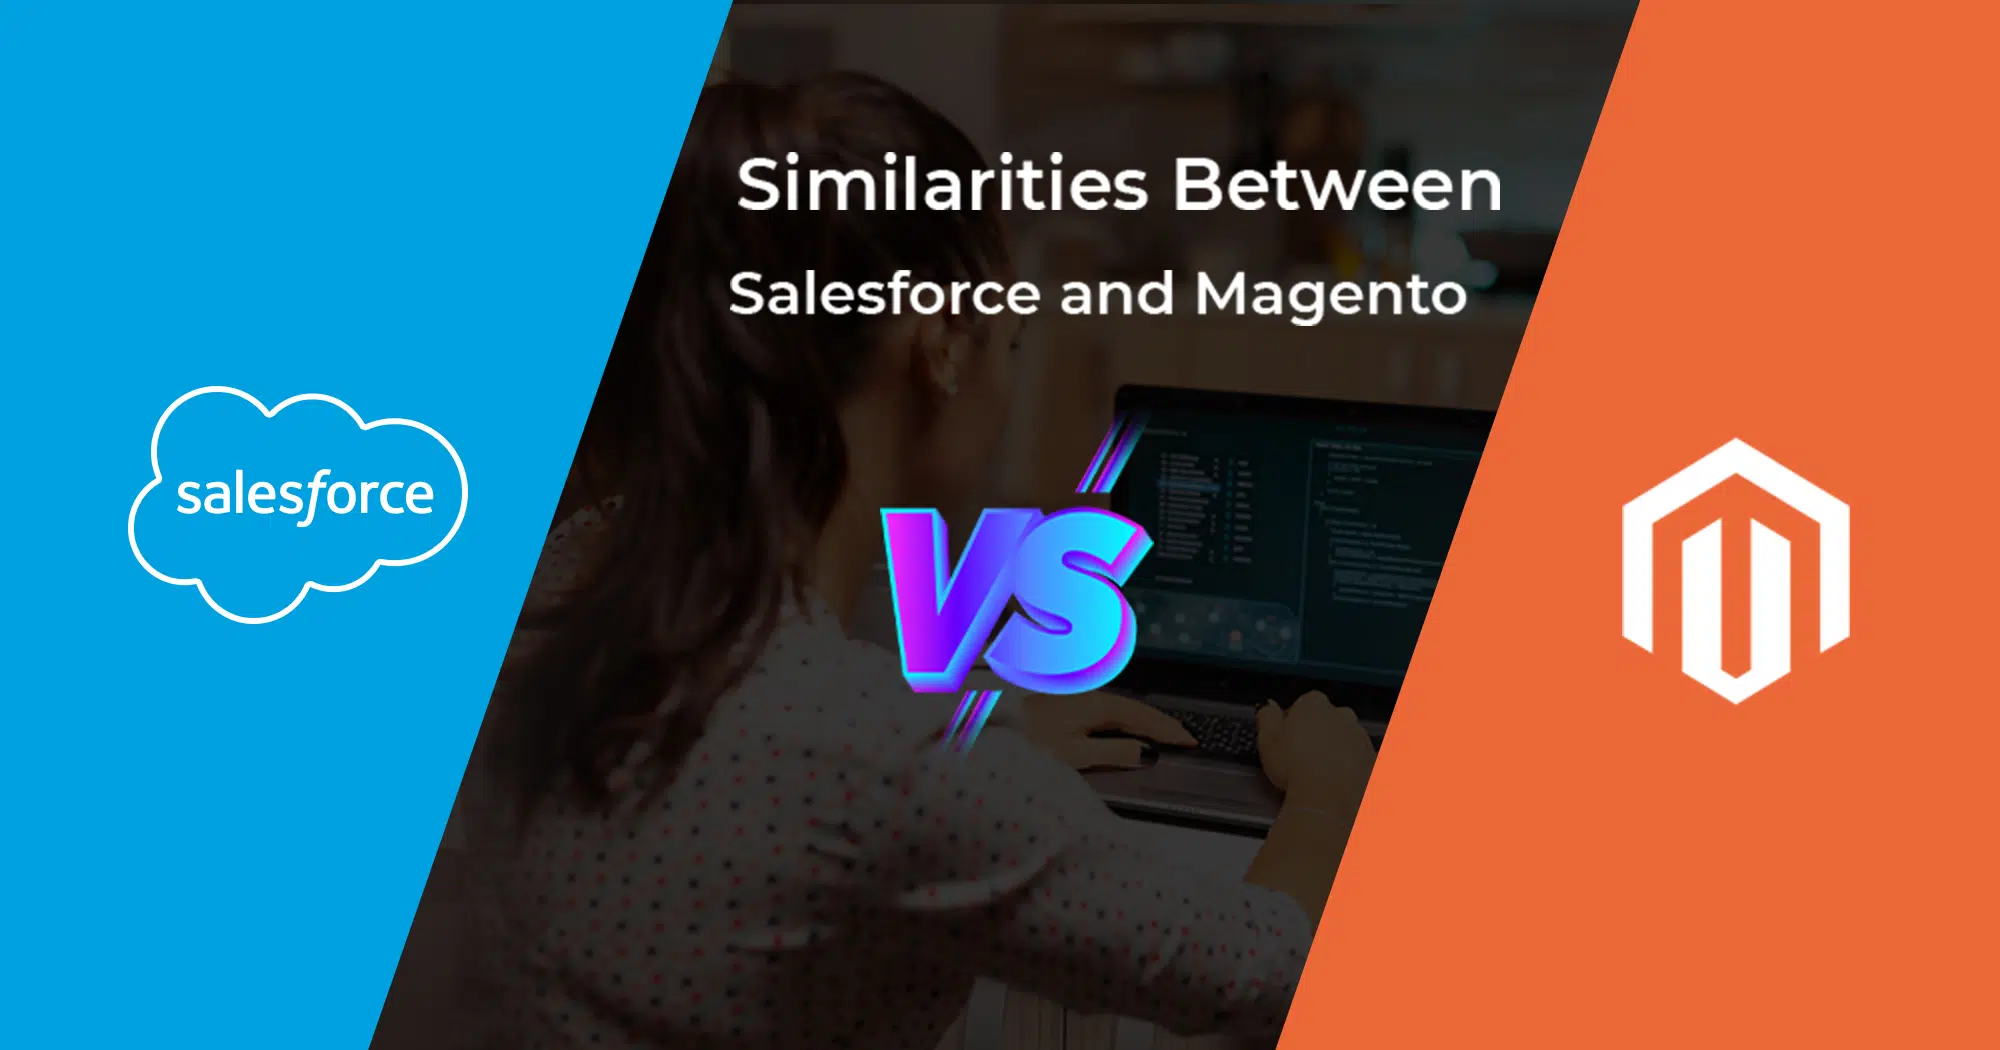 Salesforce vs Magento similarities